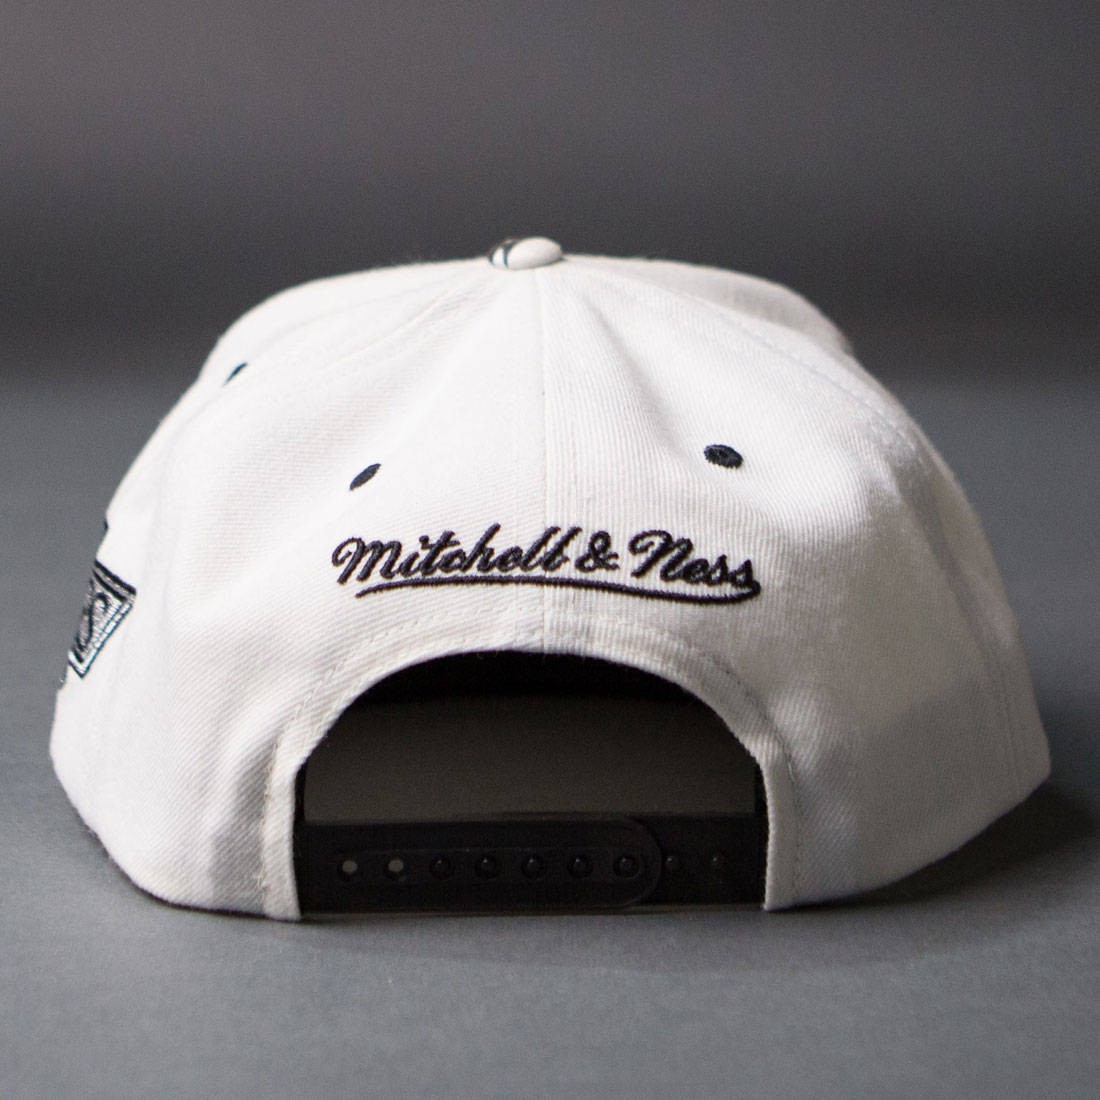 Los Angeles Kings Snapback Mitchell & Ness Sharktooth Cap Hat White Black